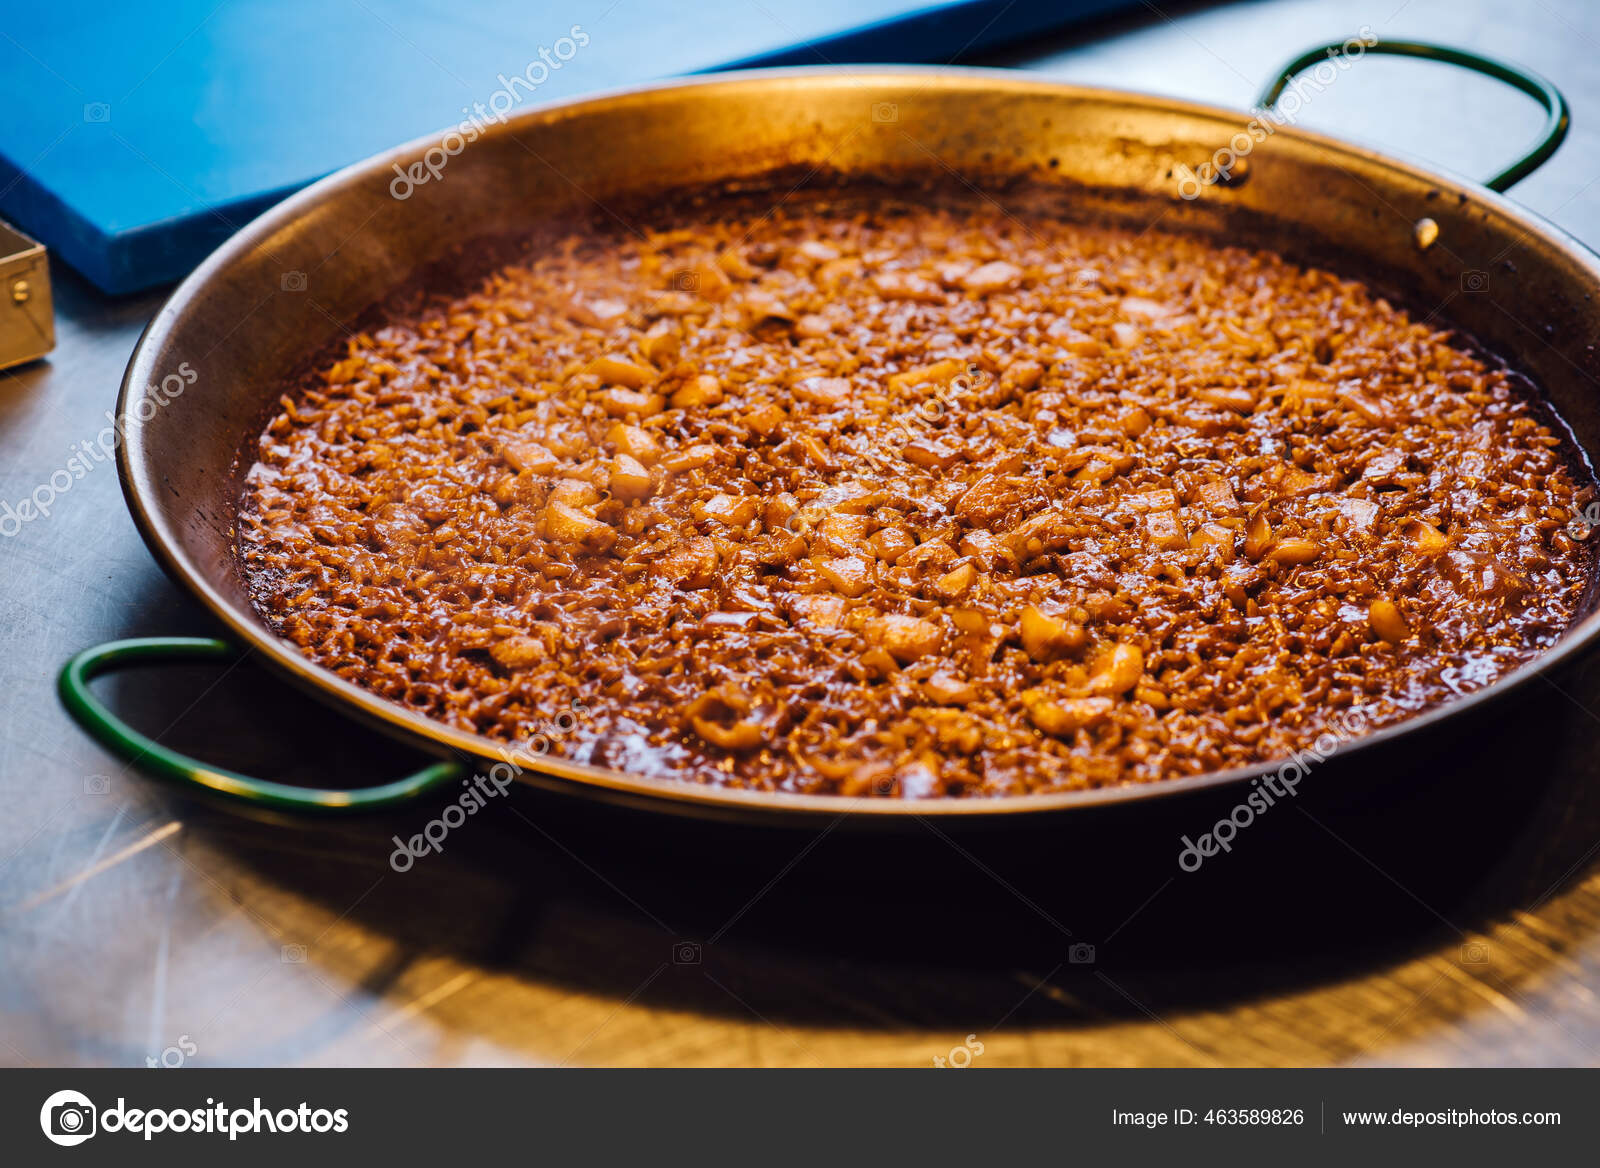 https://st2.depositphotos.com/7474240/46358/i/1600/depositphotos_463589826-stock-photo-cooking-paella-large-pot-spanish.jpg